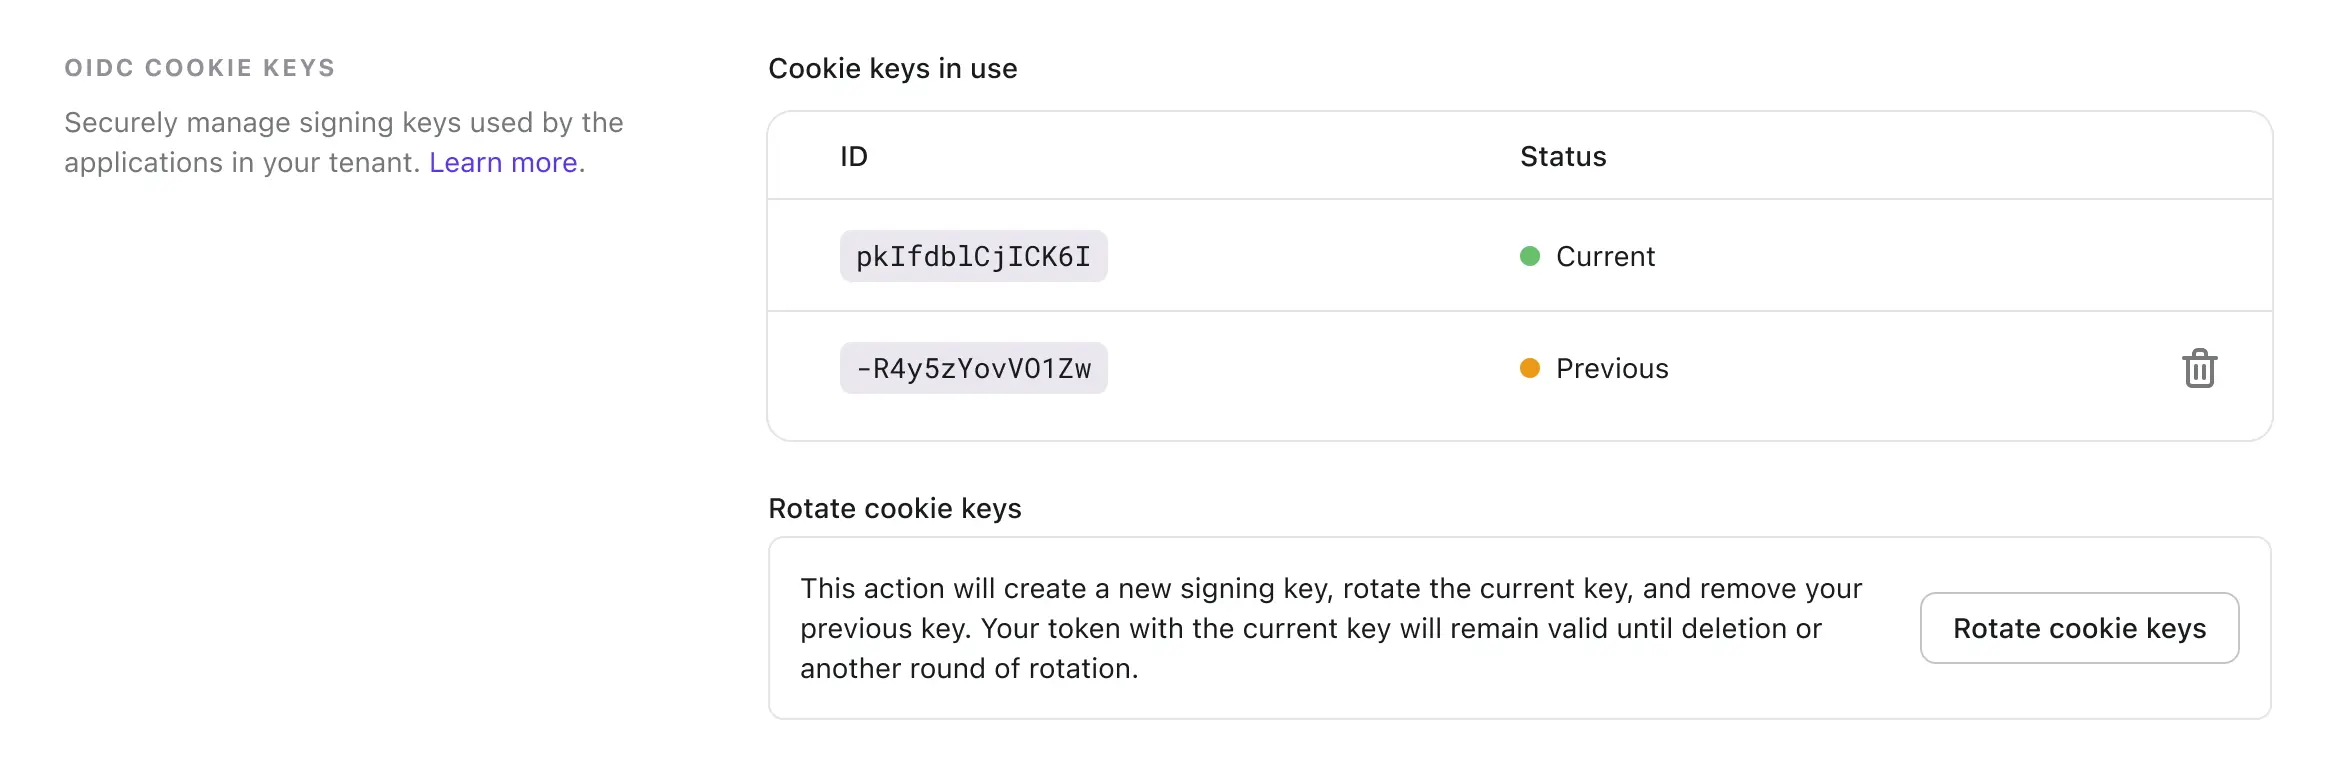 Console UI - Cookie keys